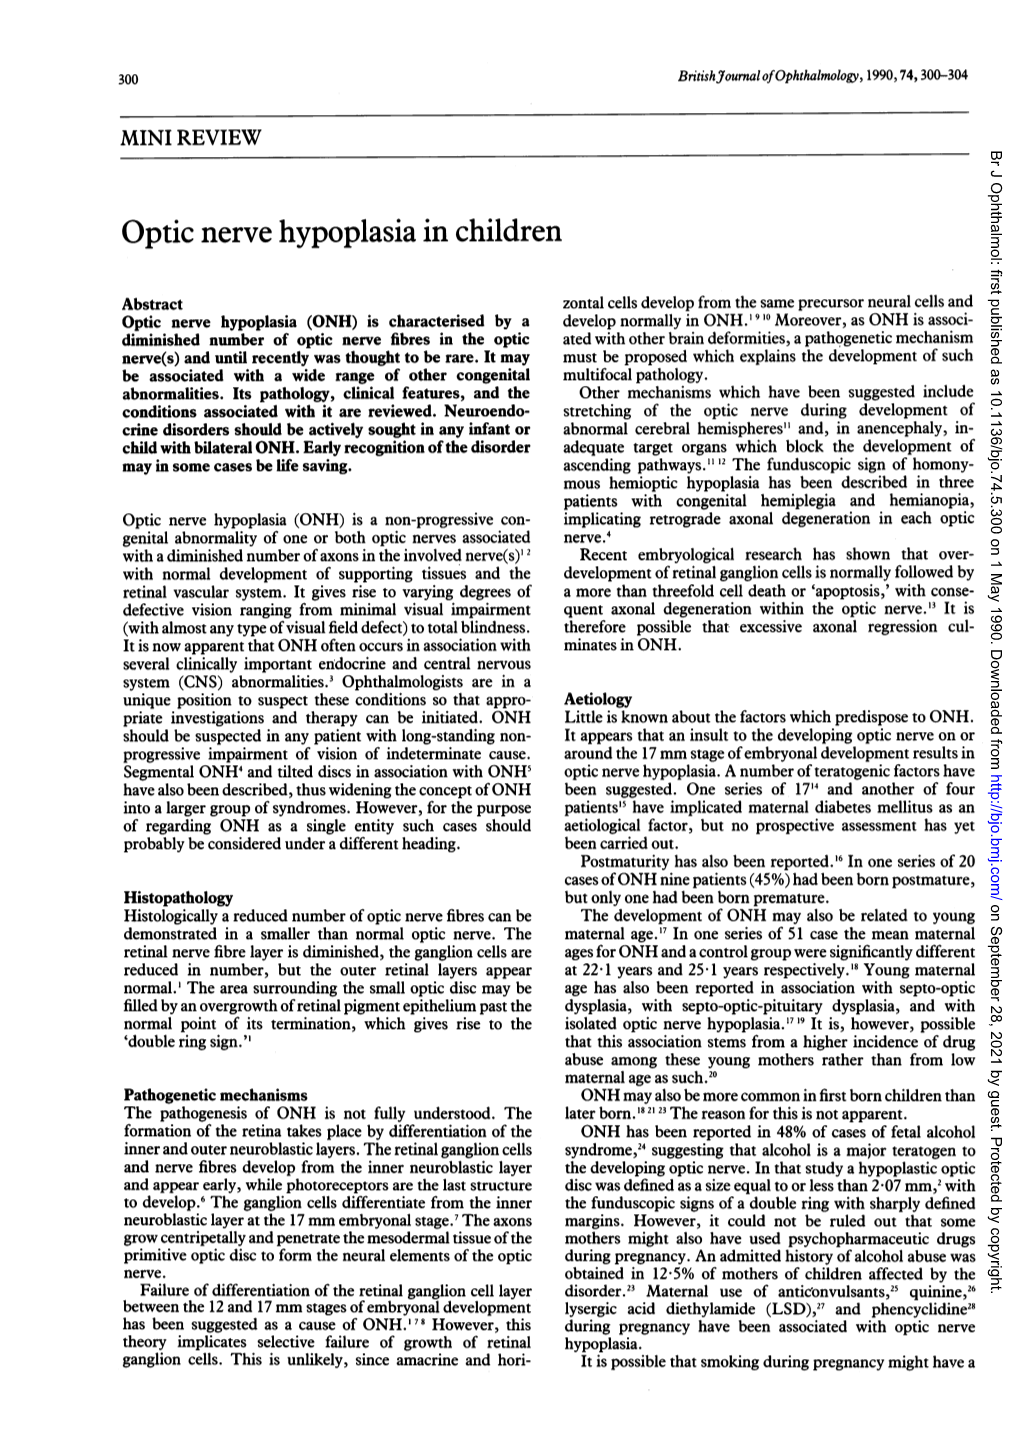 Optic Nerve Hypoplasia in Children